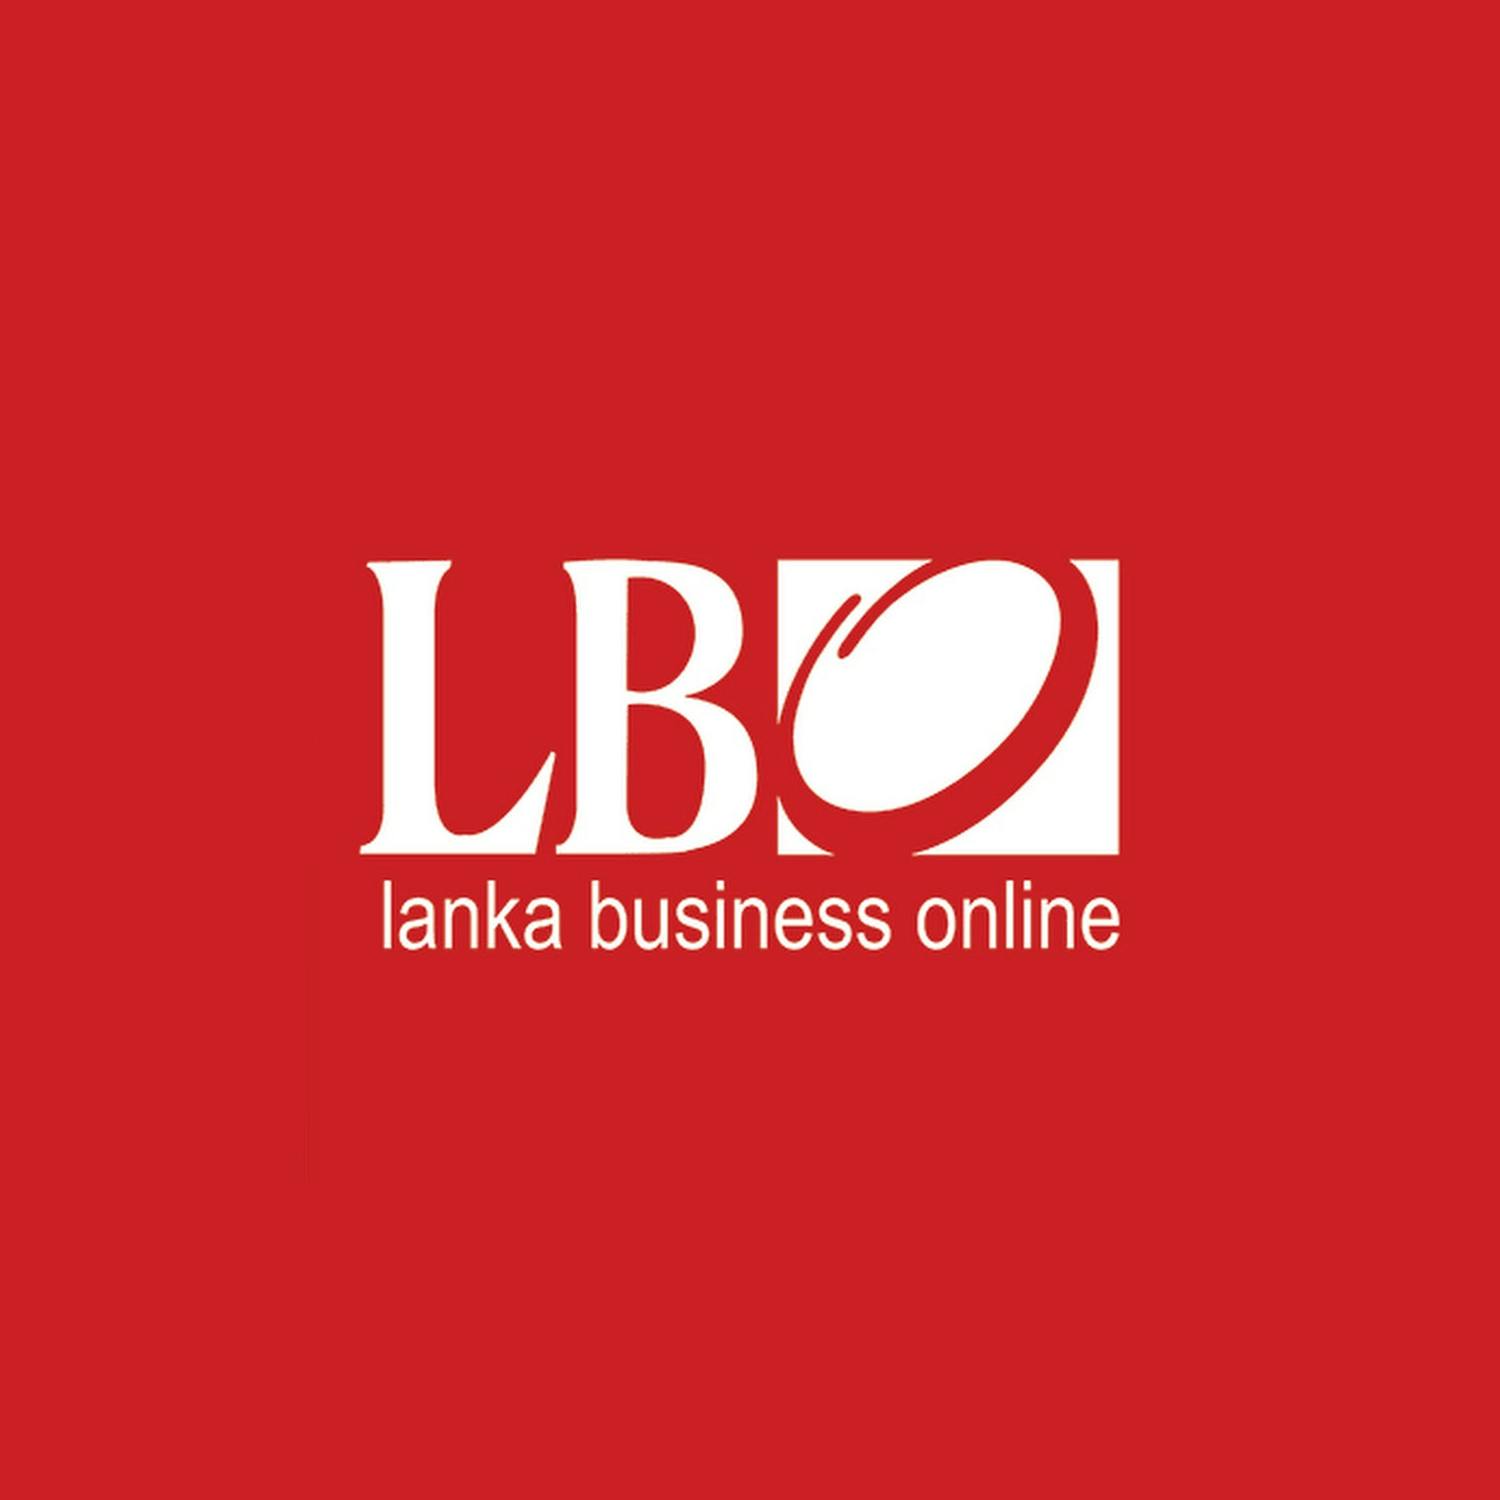 Lanka Business Online